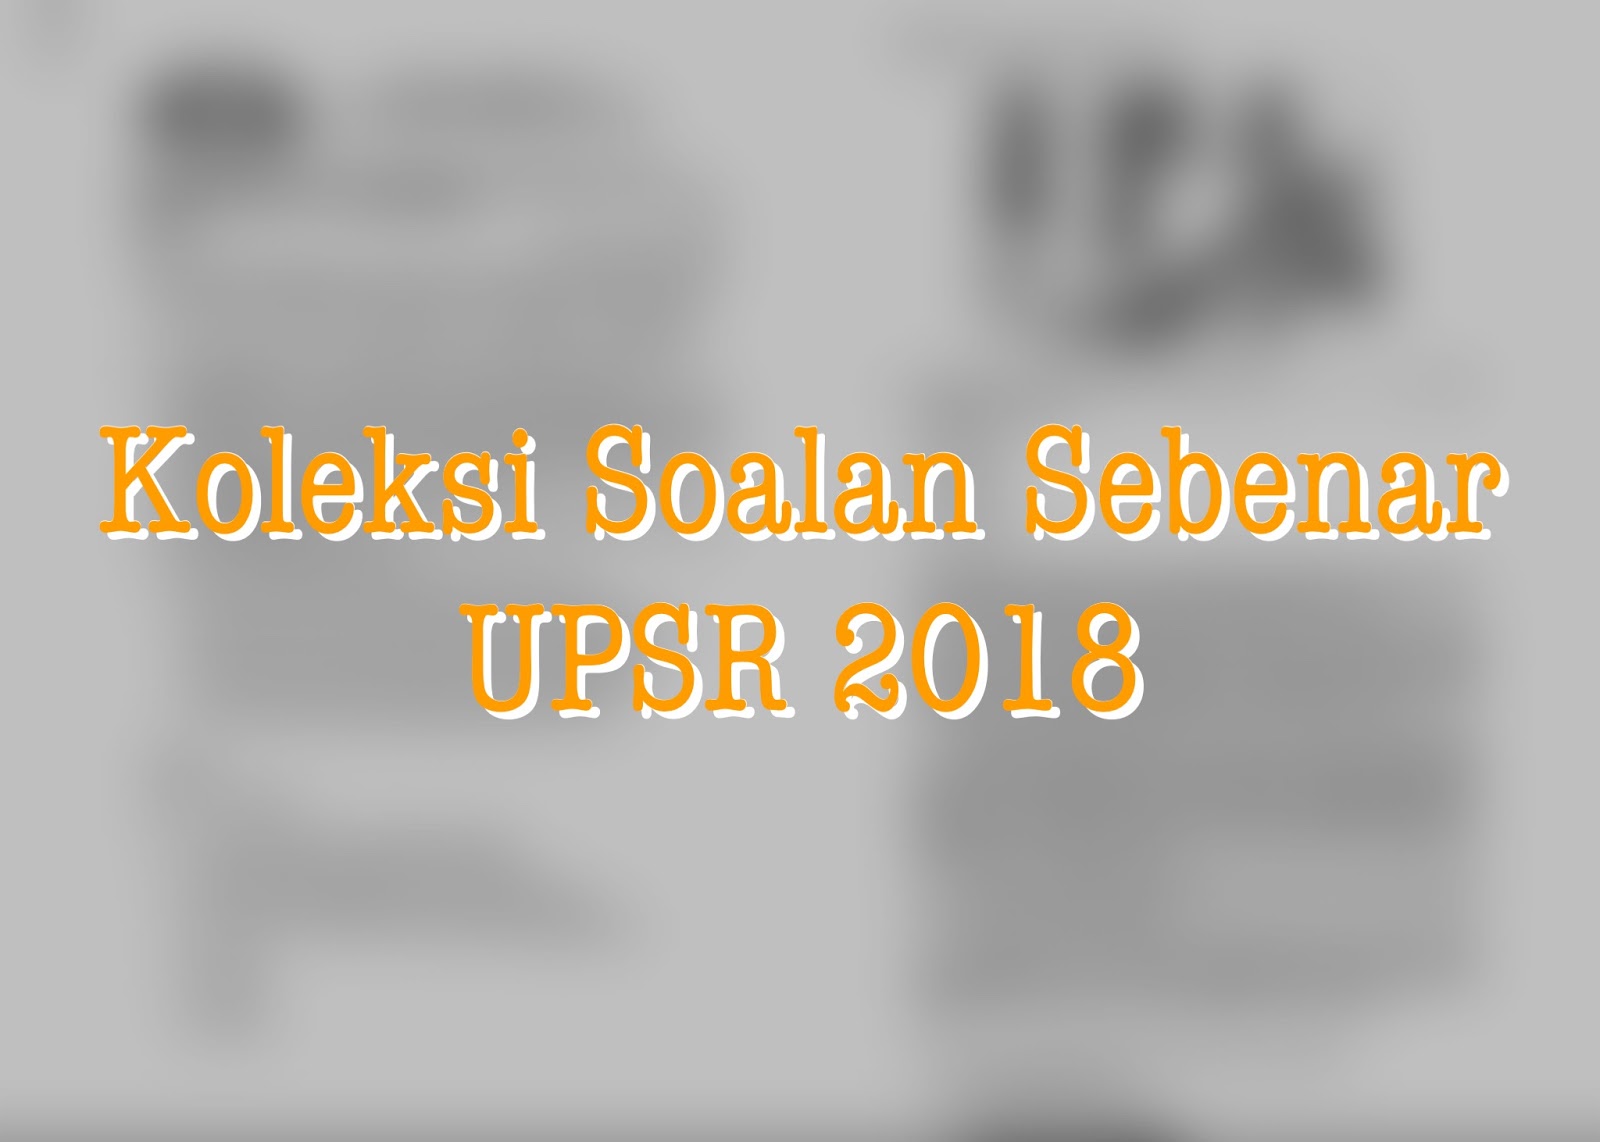 Koleksi Soalan Sebenar UPSR Tahun 2018 - Cikgu Share